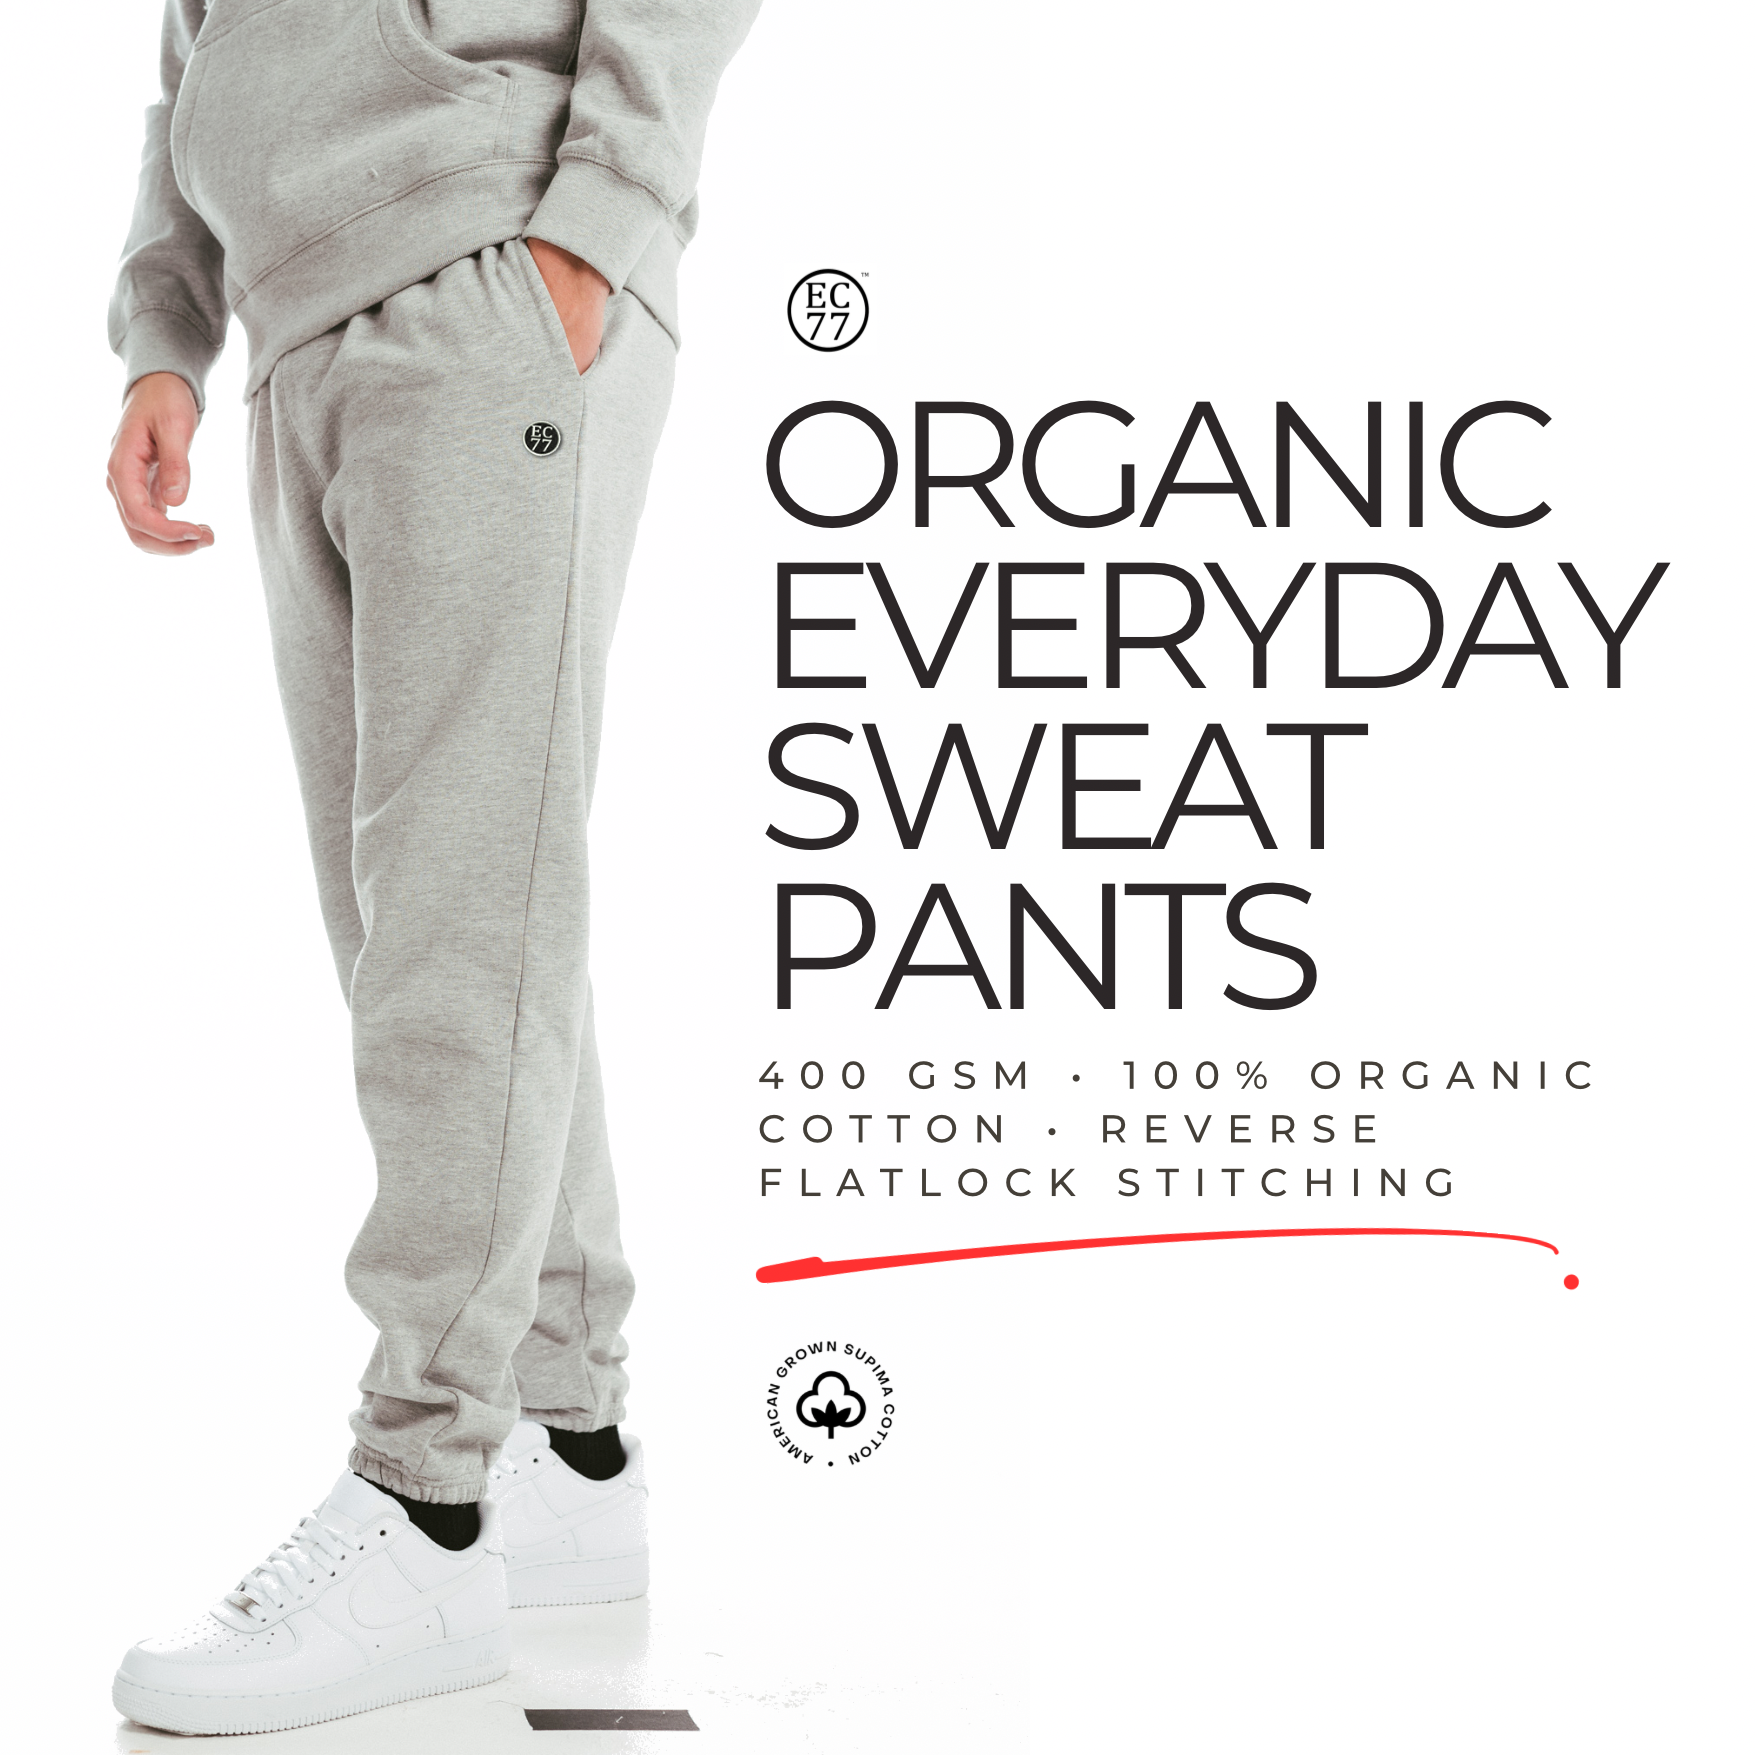 The Everyday Organic Sweats